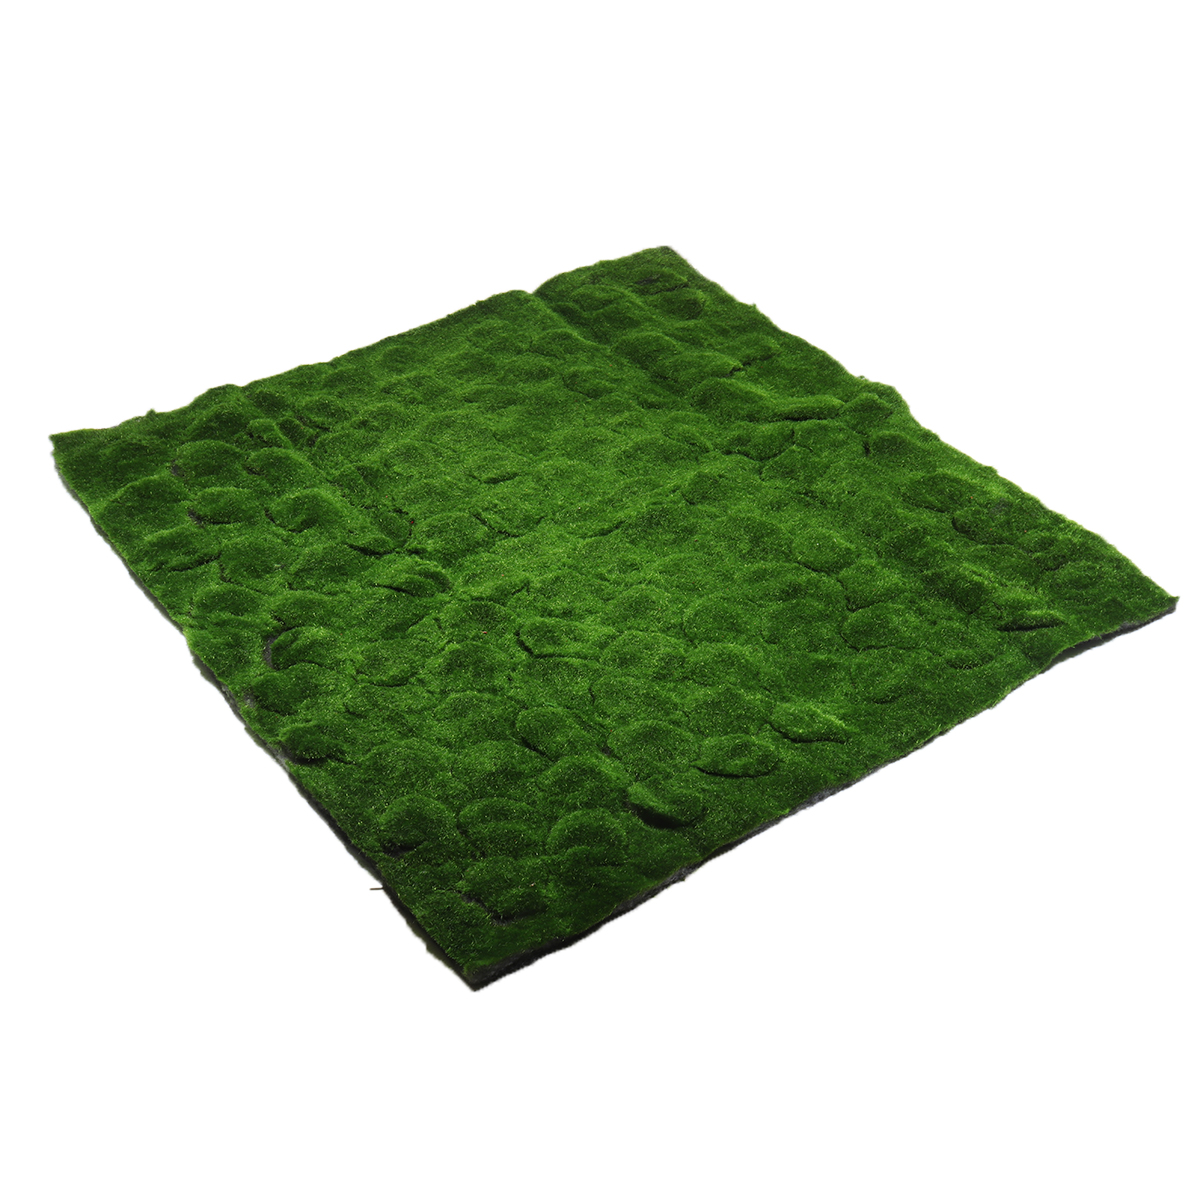 Artificial-Moss-Mat-DIY-Landscape-Flat-Grass-Lawn-Turf-Plants-Shop-Home-Decor-1825556-6